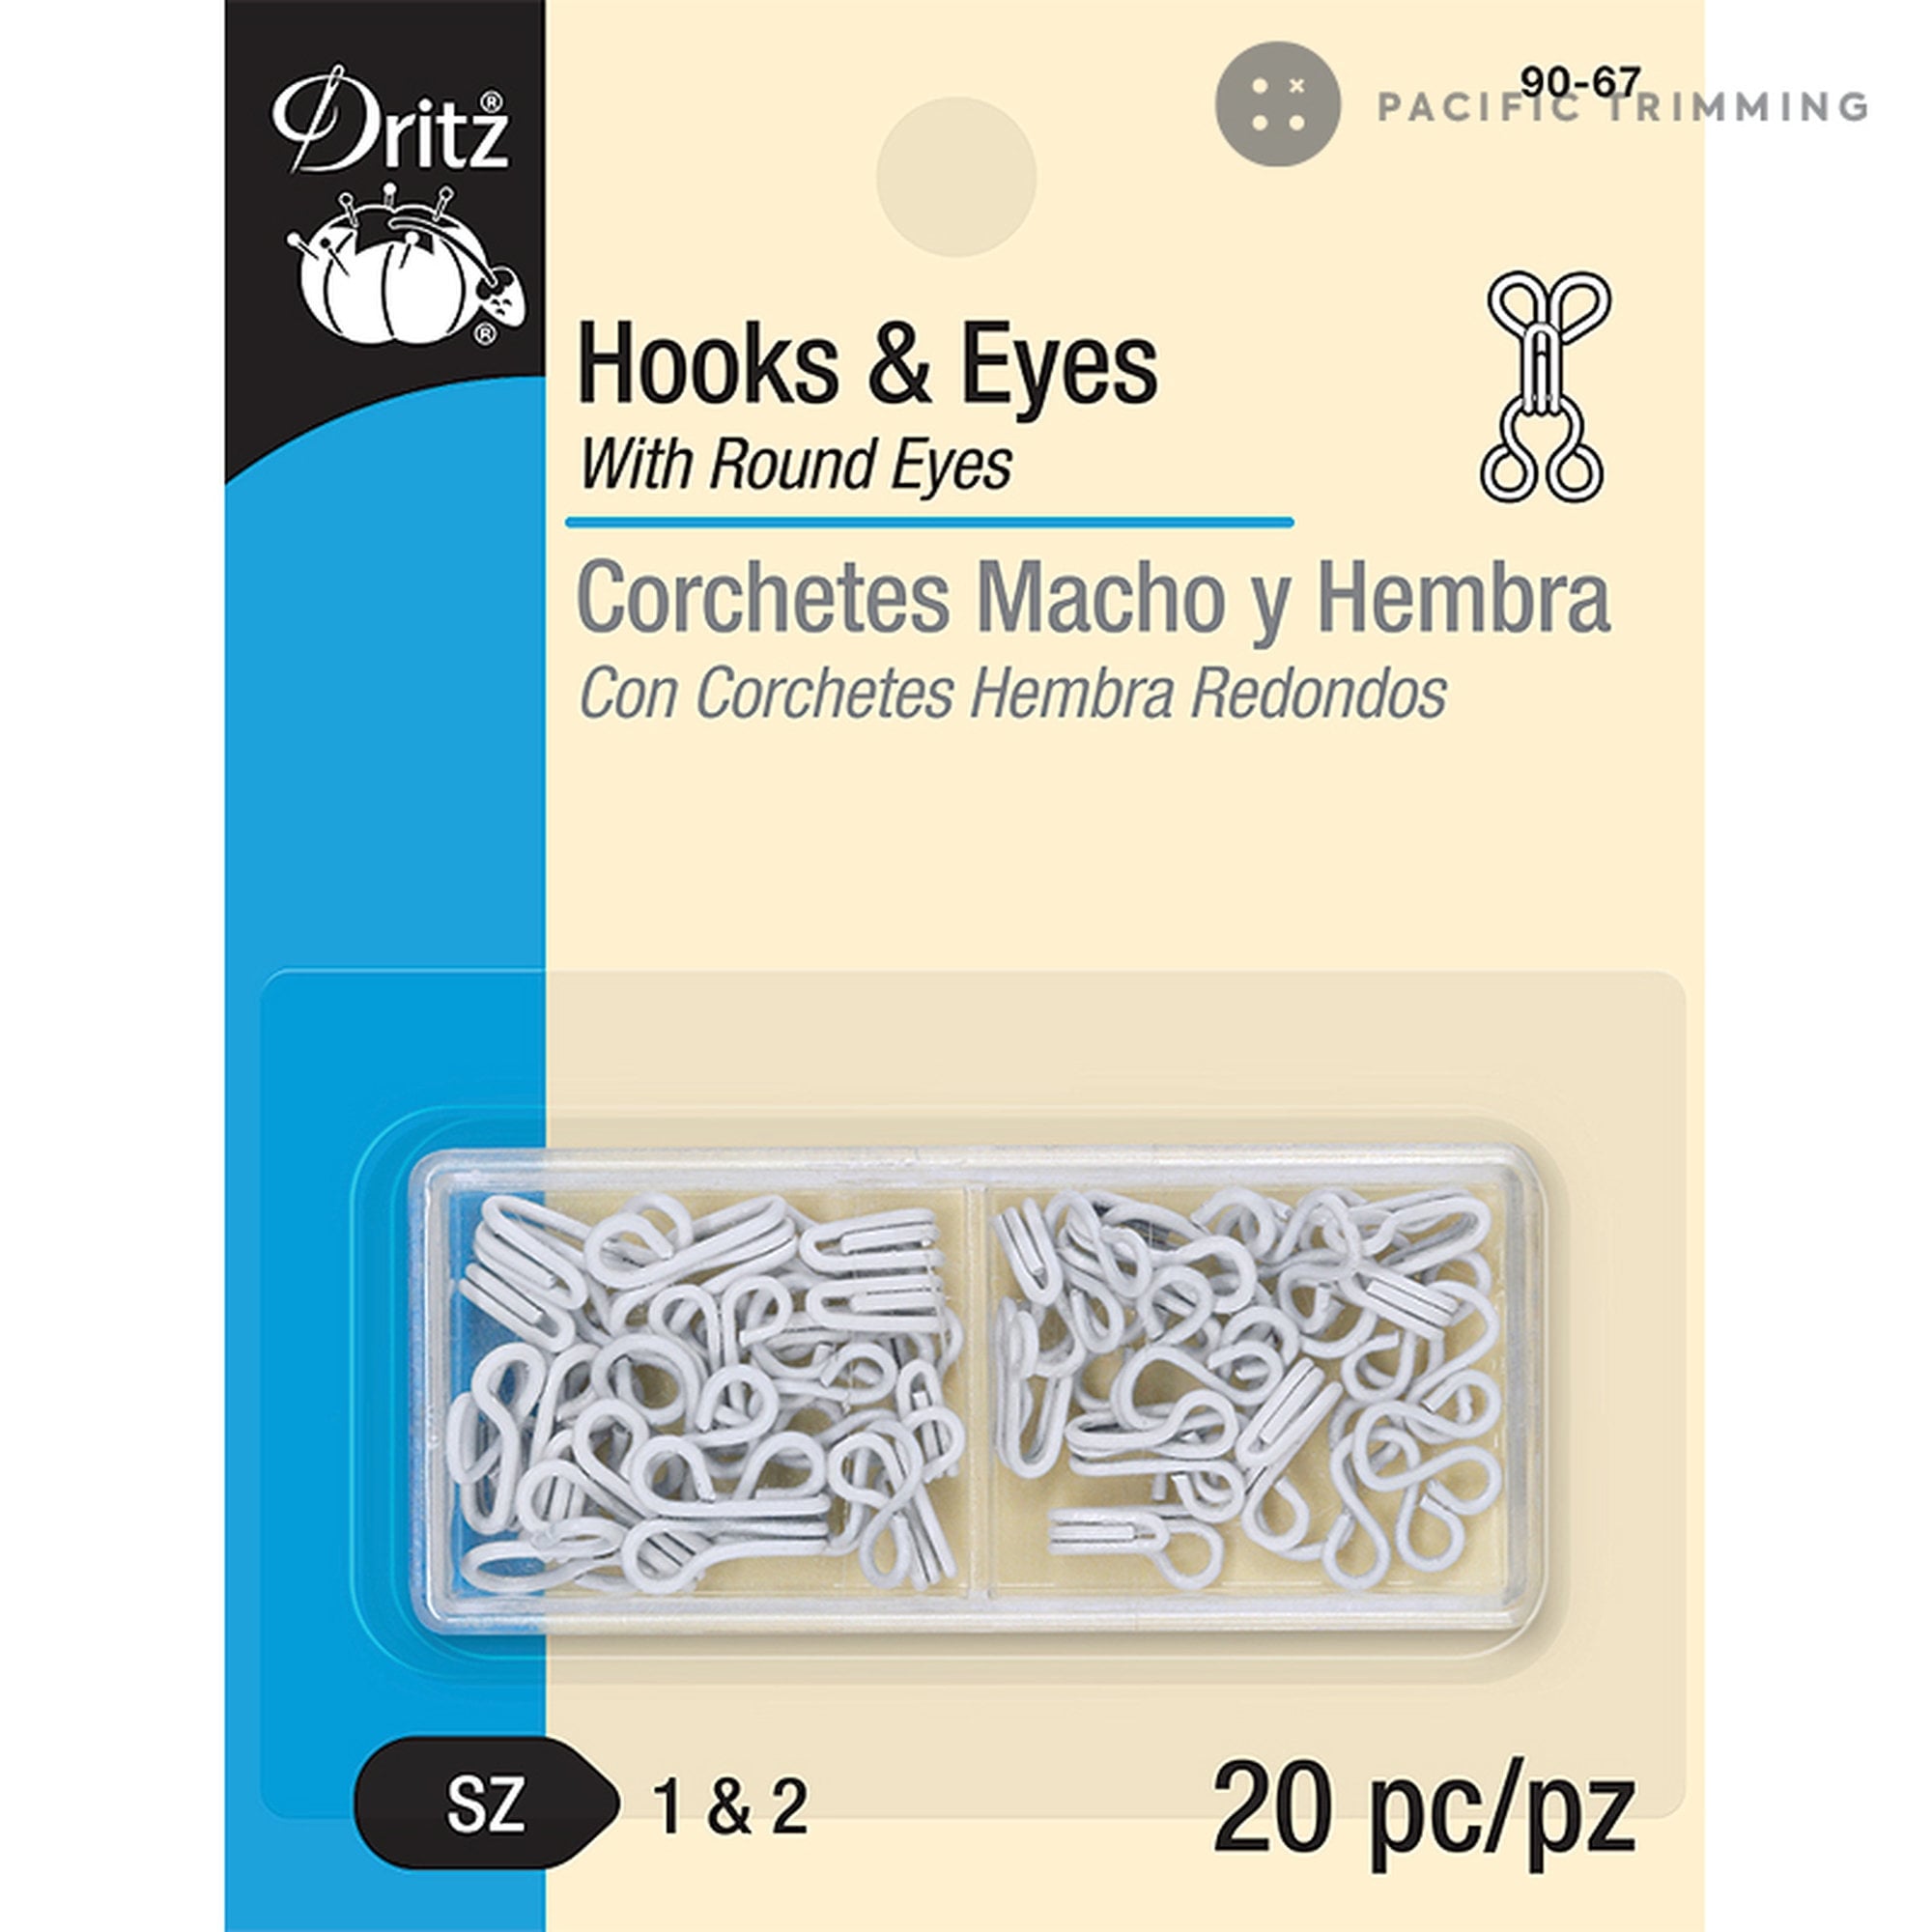 Steel Crochet Hooks With Wooden Handle Case Set, 10 Sizes, 0.5-2.75mm 